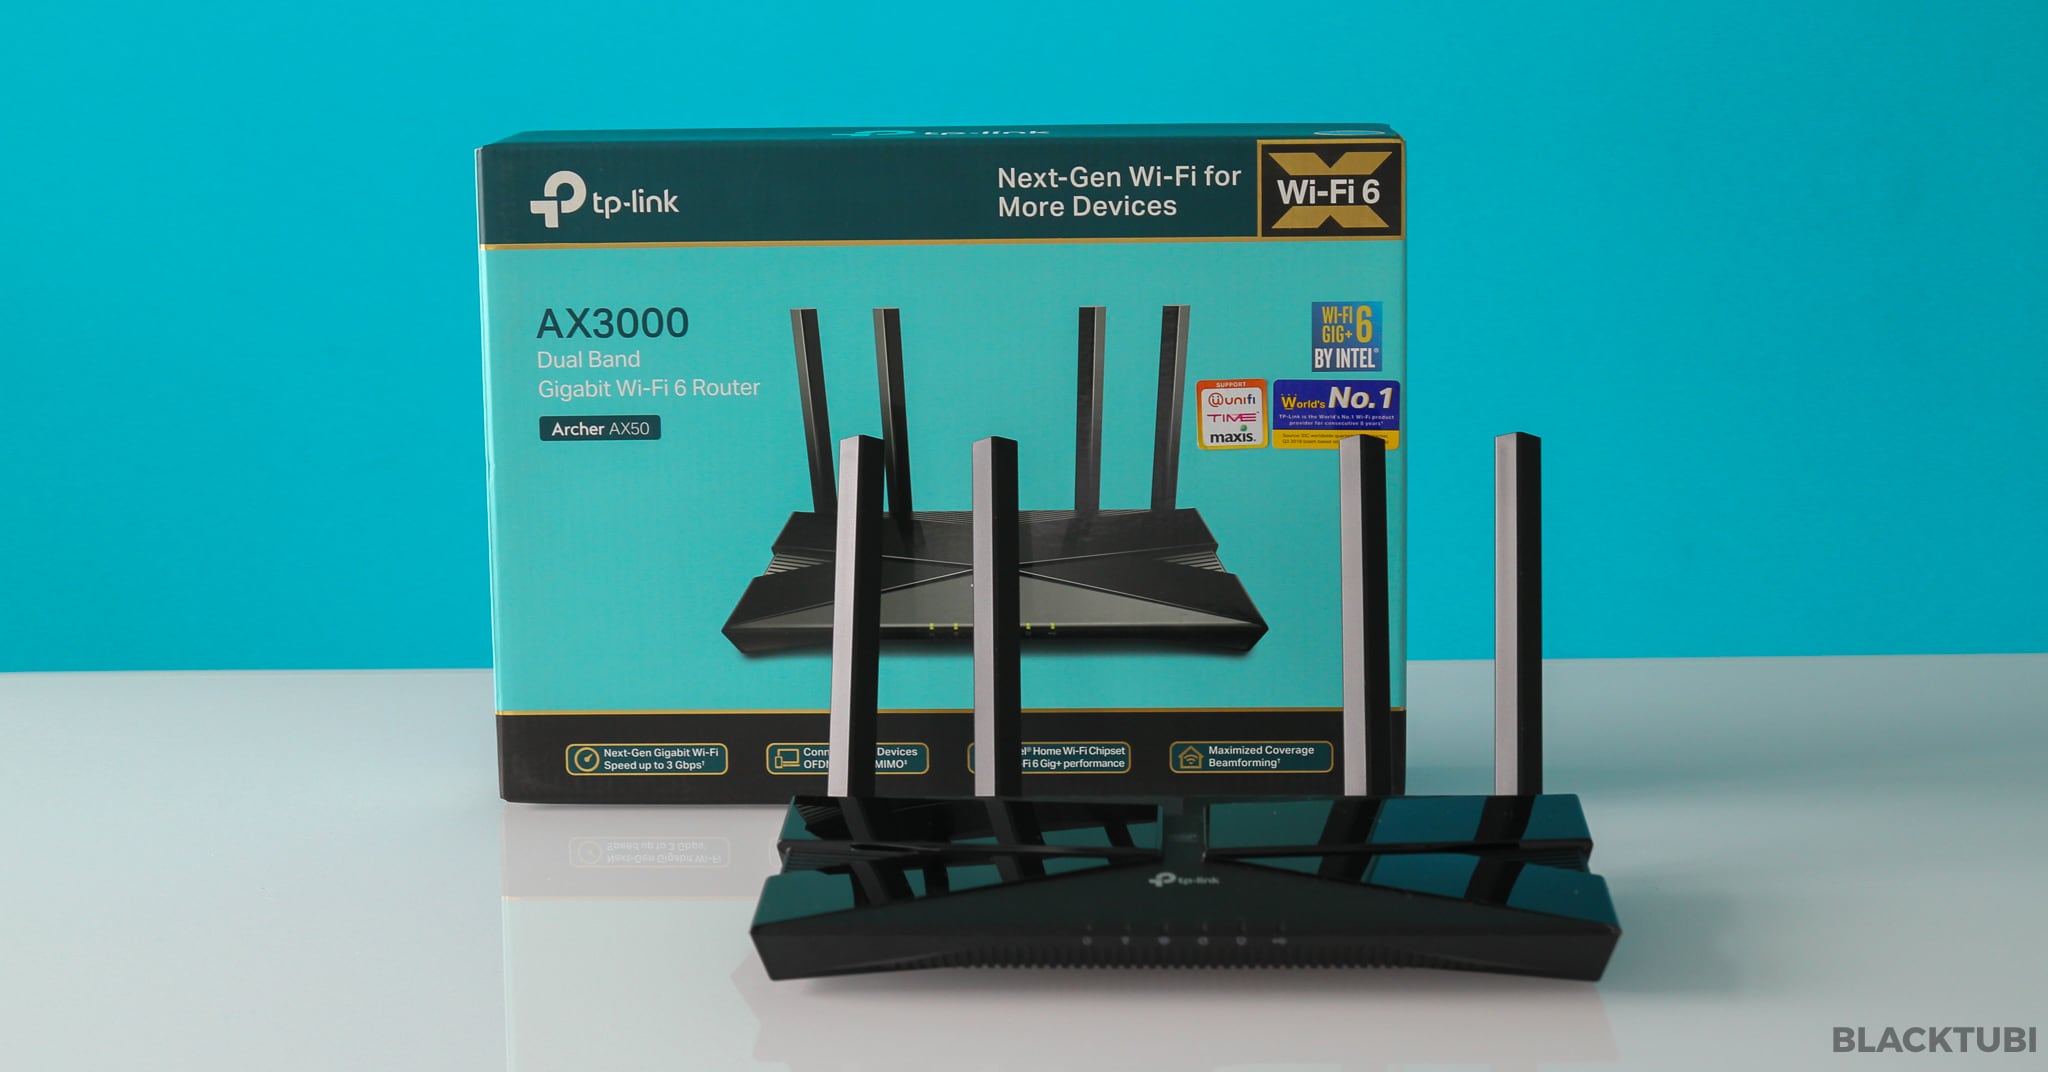 TP-Link Archer AX50 WiFi 6 AX3000 Router Review - Blacktubi